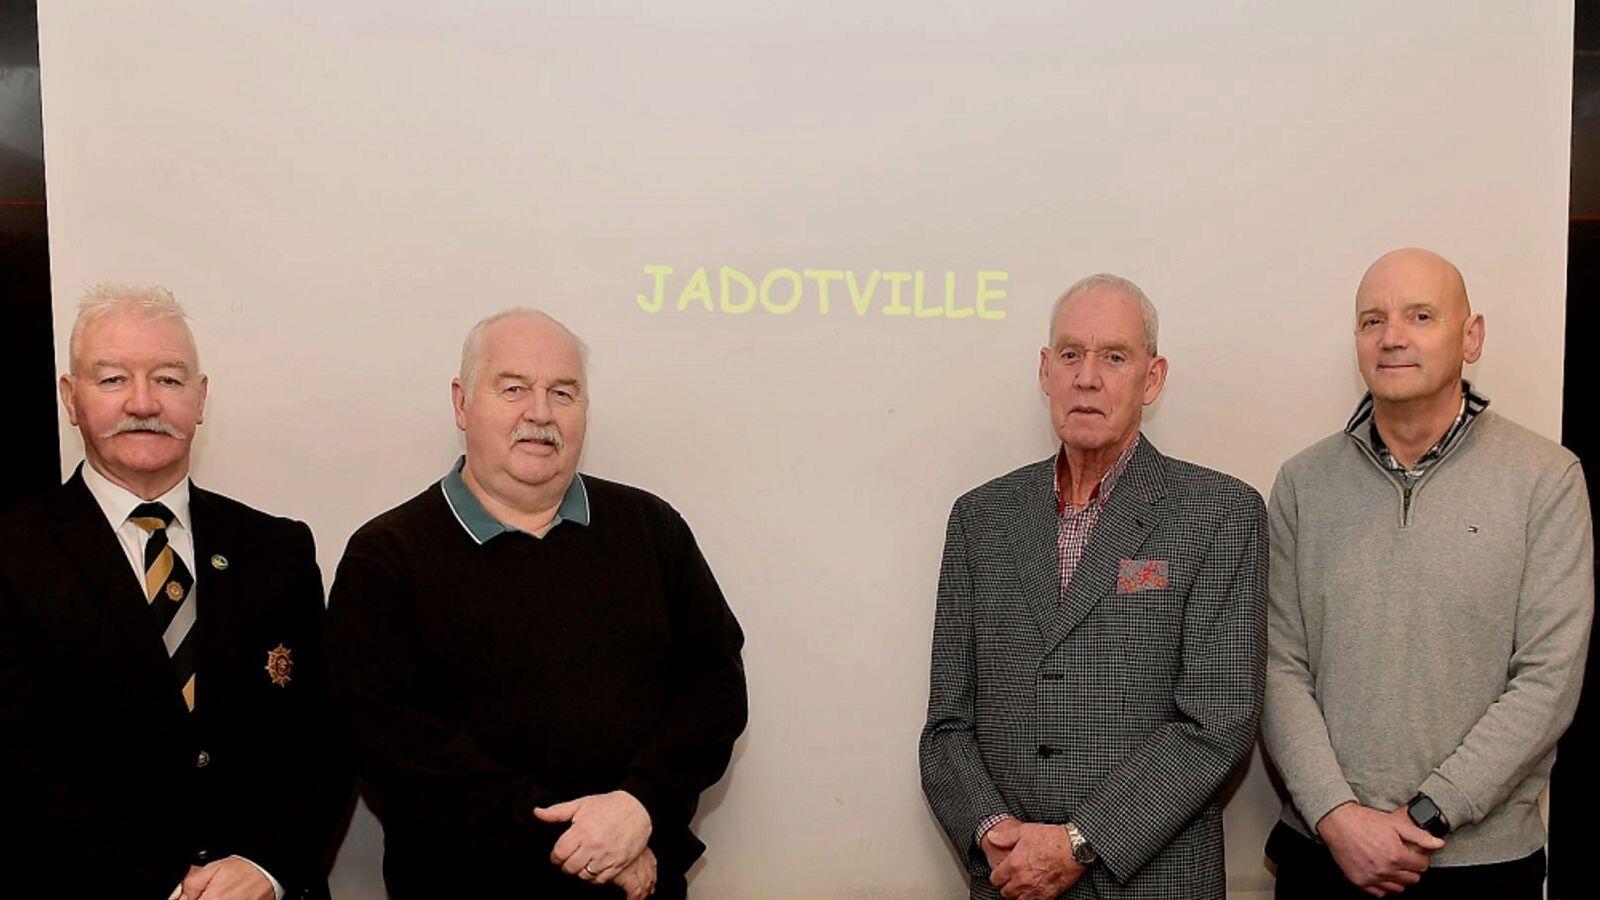 Battle of Jadotville relived at gripping talk